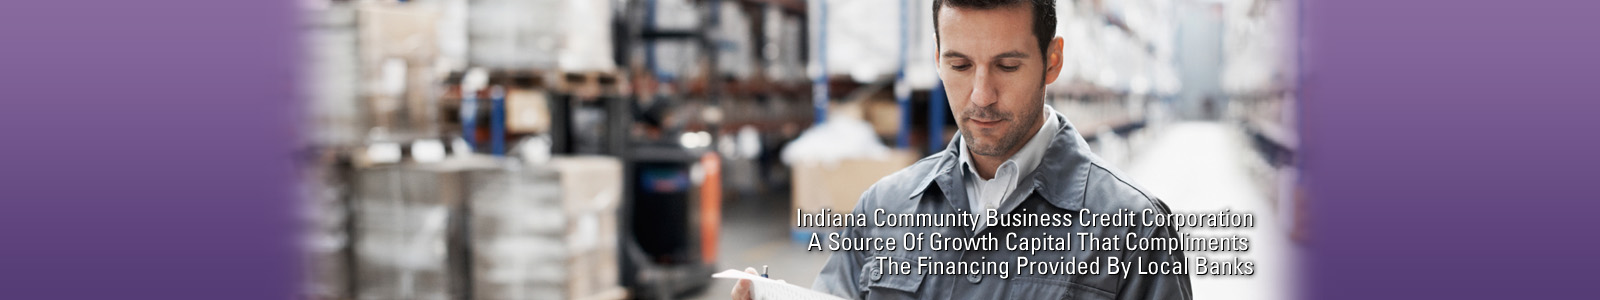 Indiana Community Business Credit Corporation